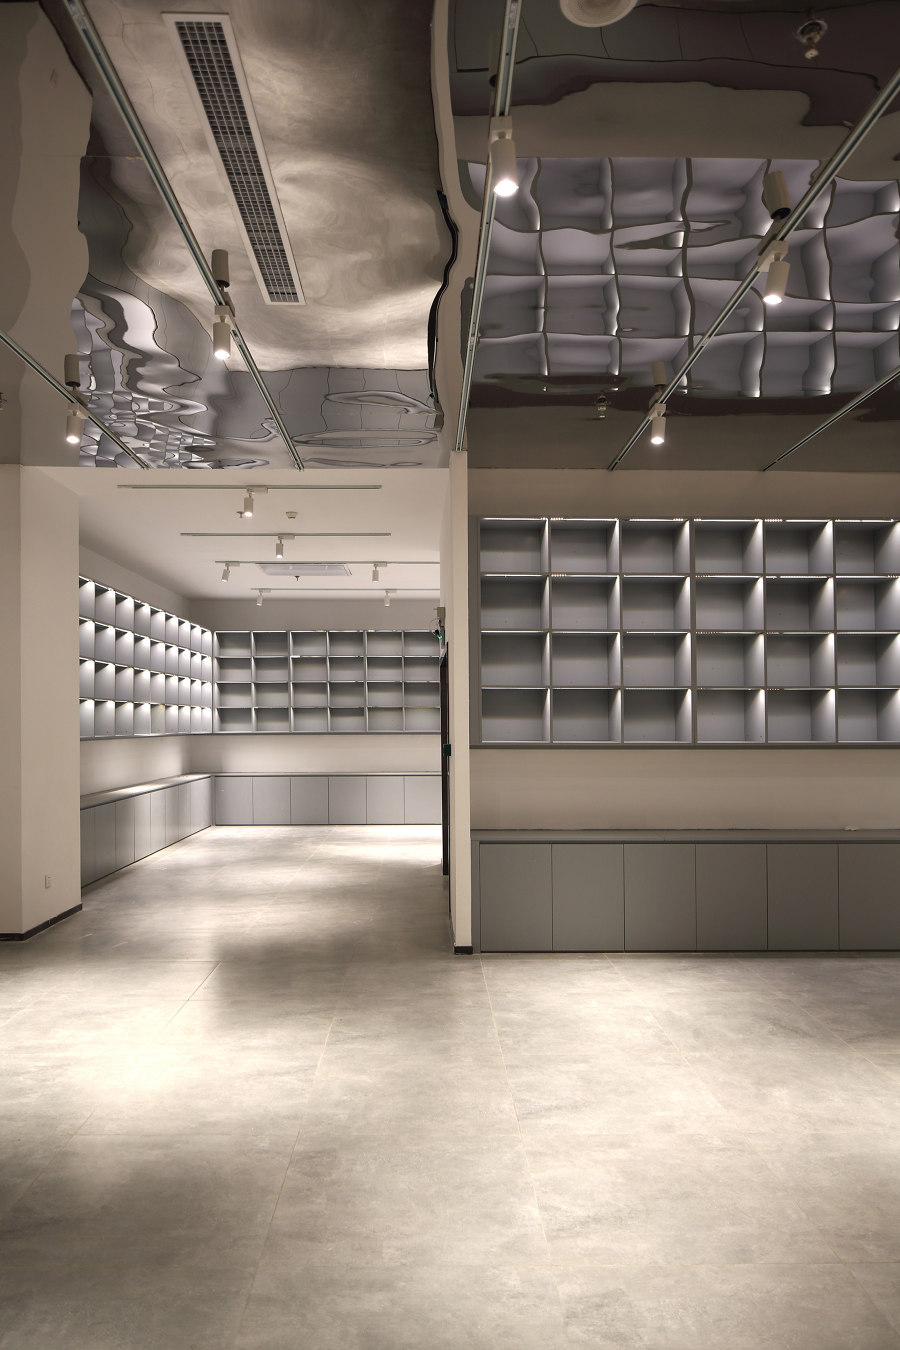 Yuanping Meijing Bookstore de y.ad studio | Diseño de tiendas